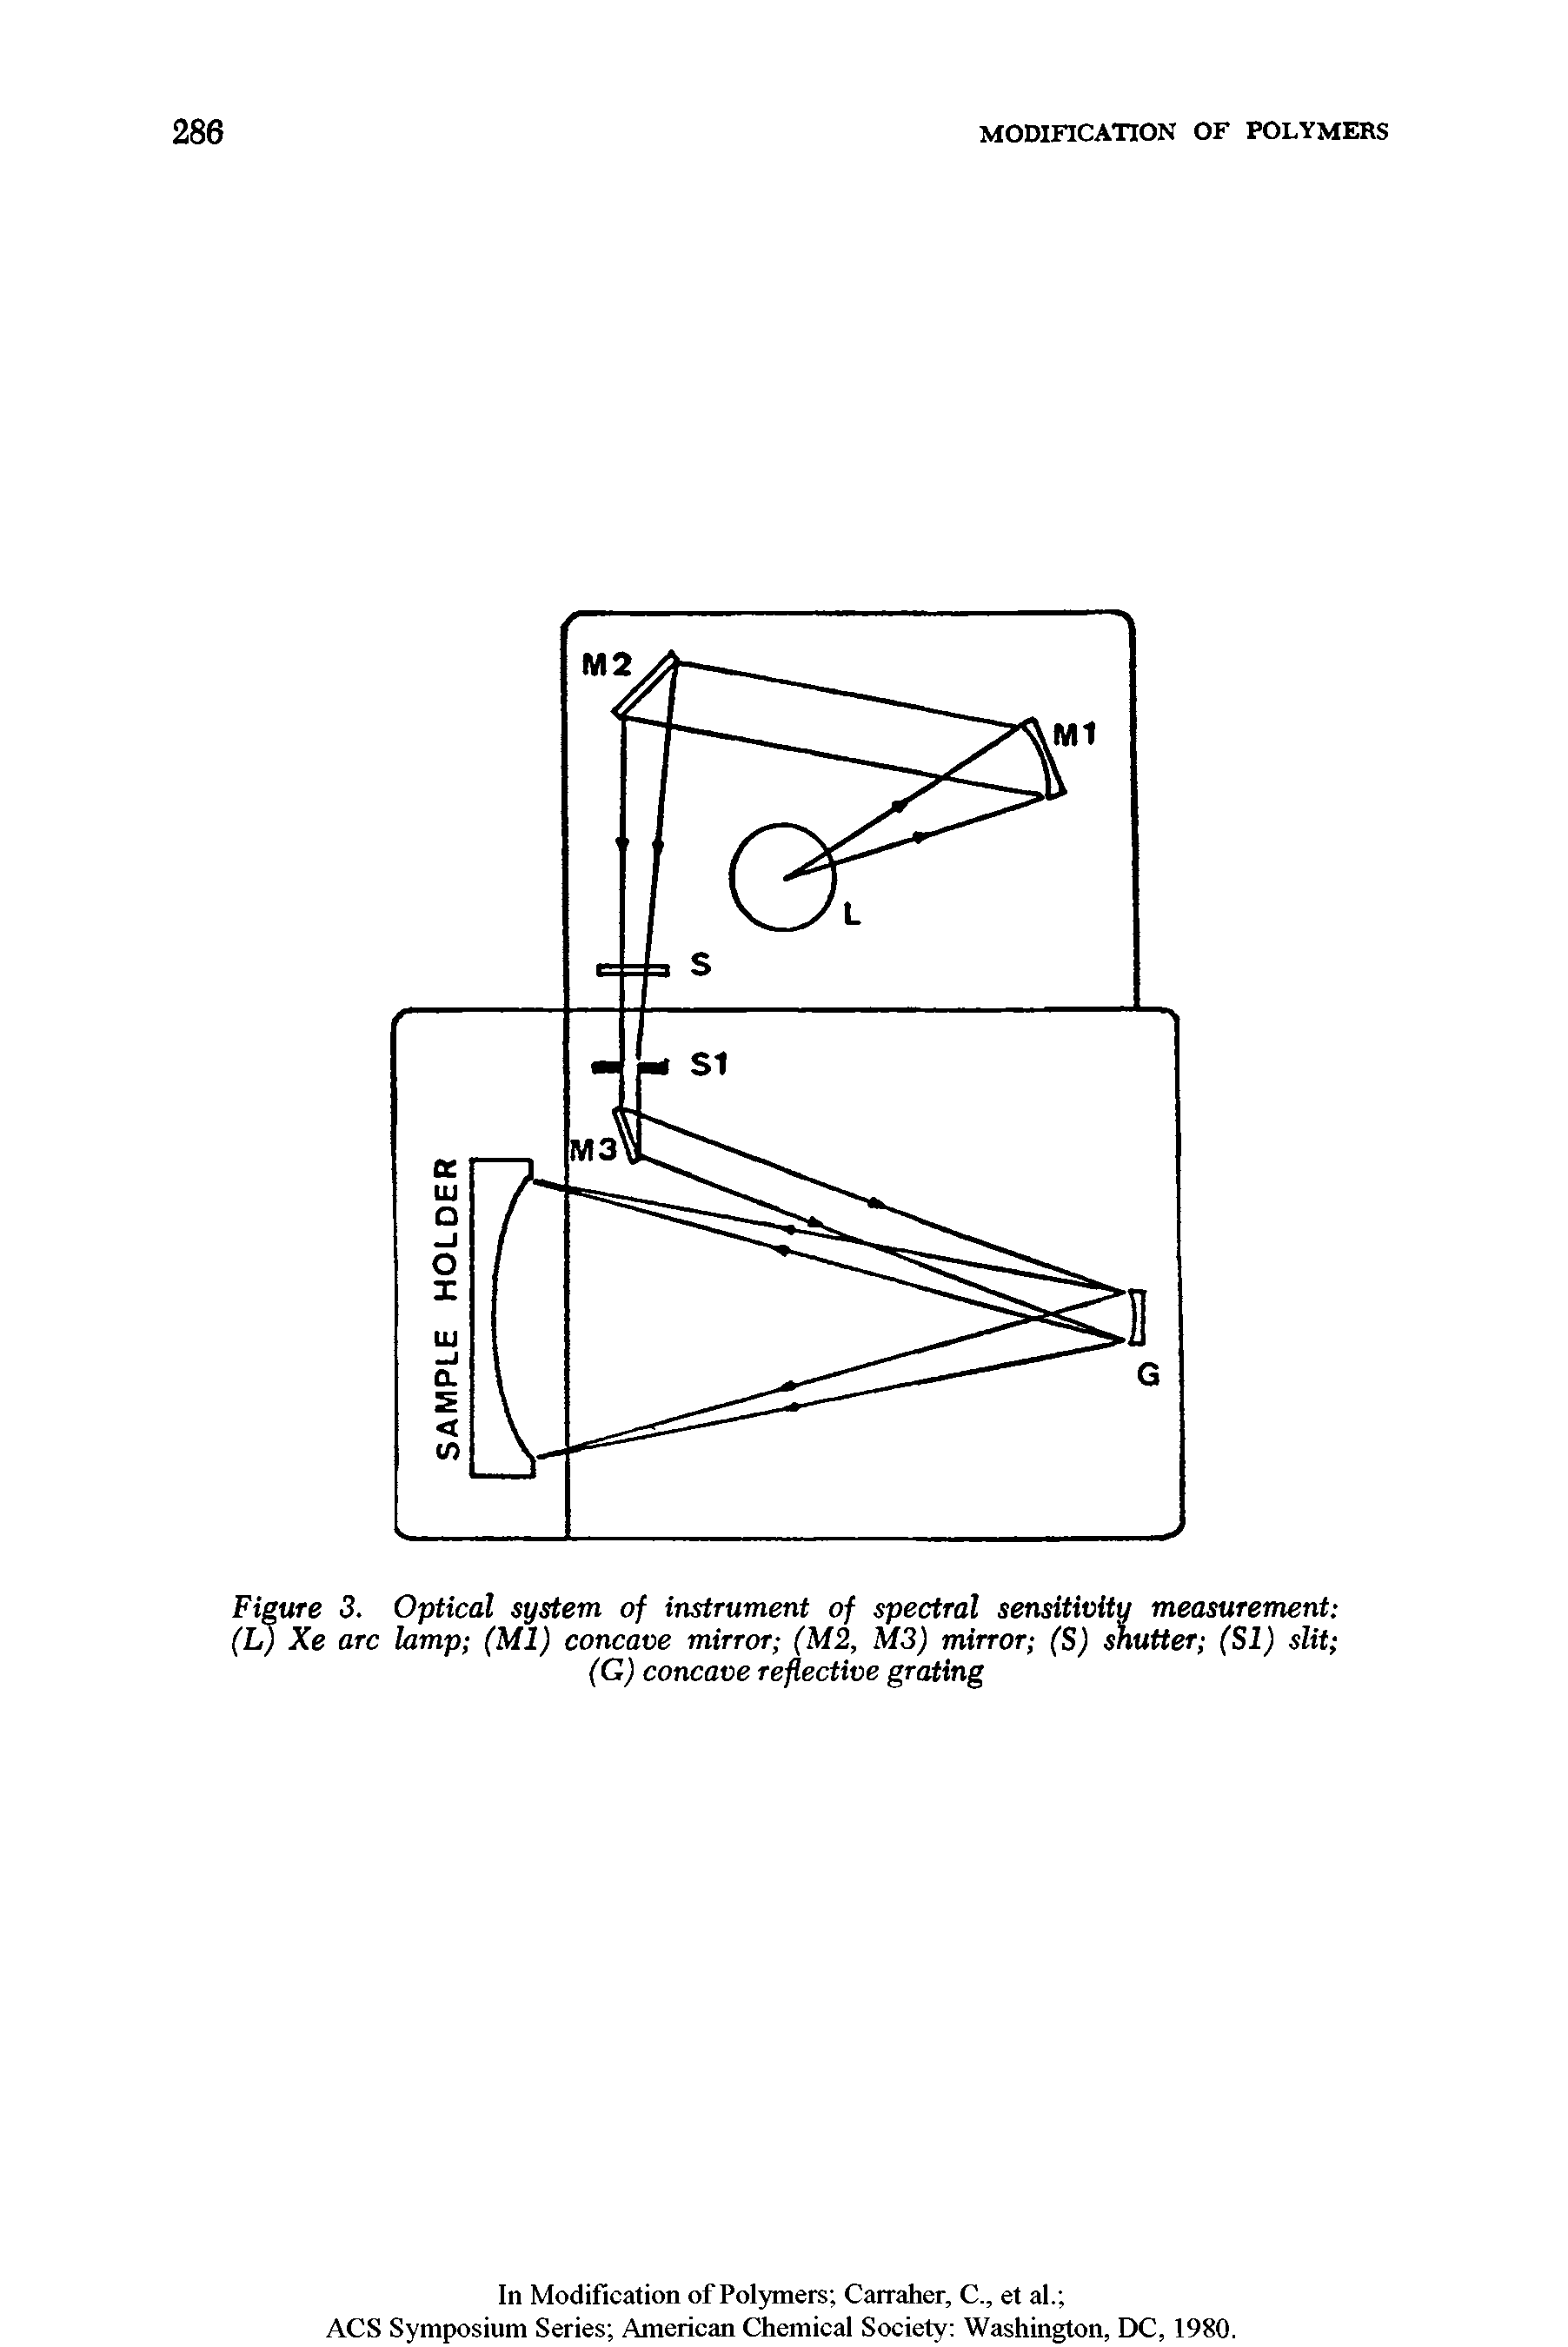 Figure 3. Optical system of instrument of spectral sensitivity measurement (L) Xe arc lamp (Ml) concave mirror (M2, M3) mirror (S) shutter (SI) slit (G) concave reflective grating...